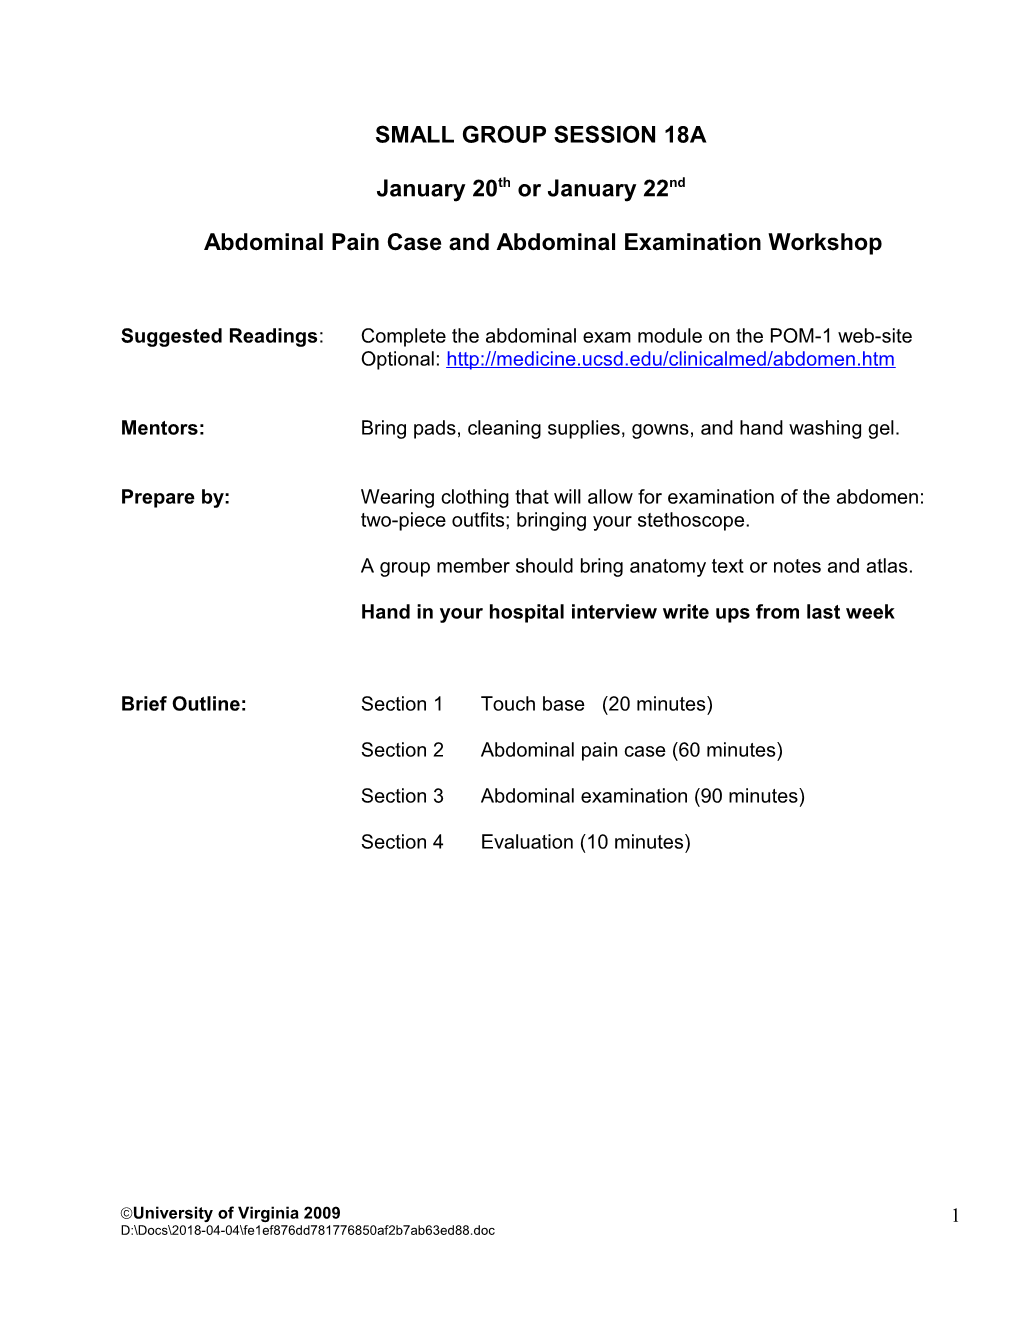 Abdominal Pain Case and Abdominal Examination Workshop